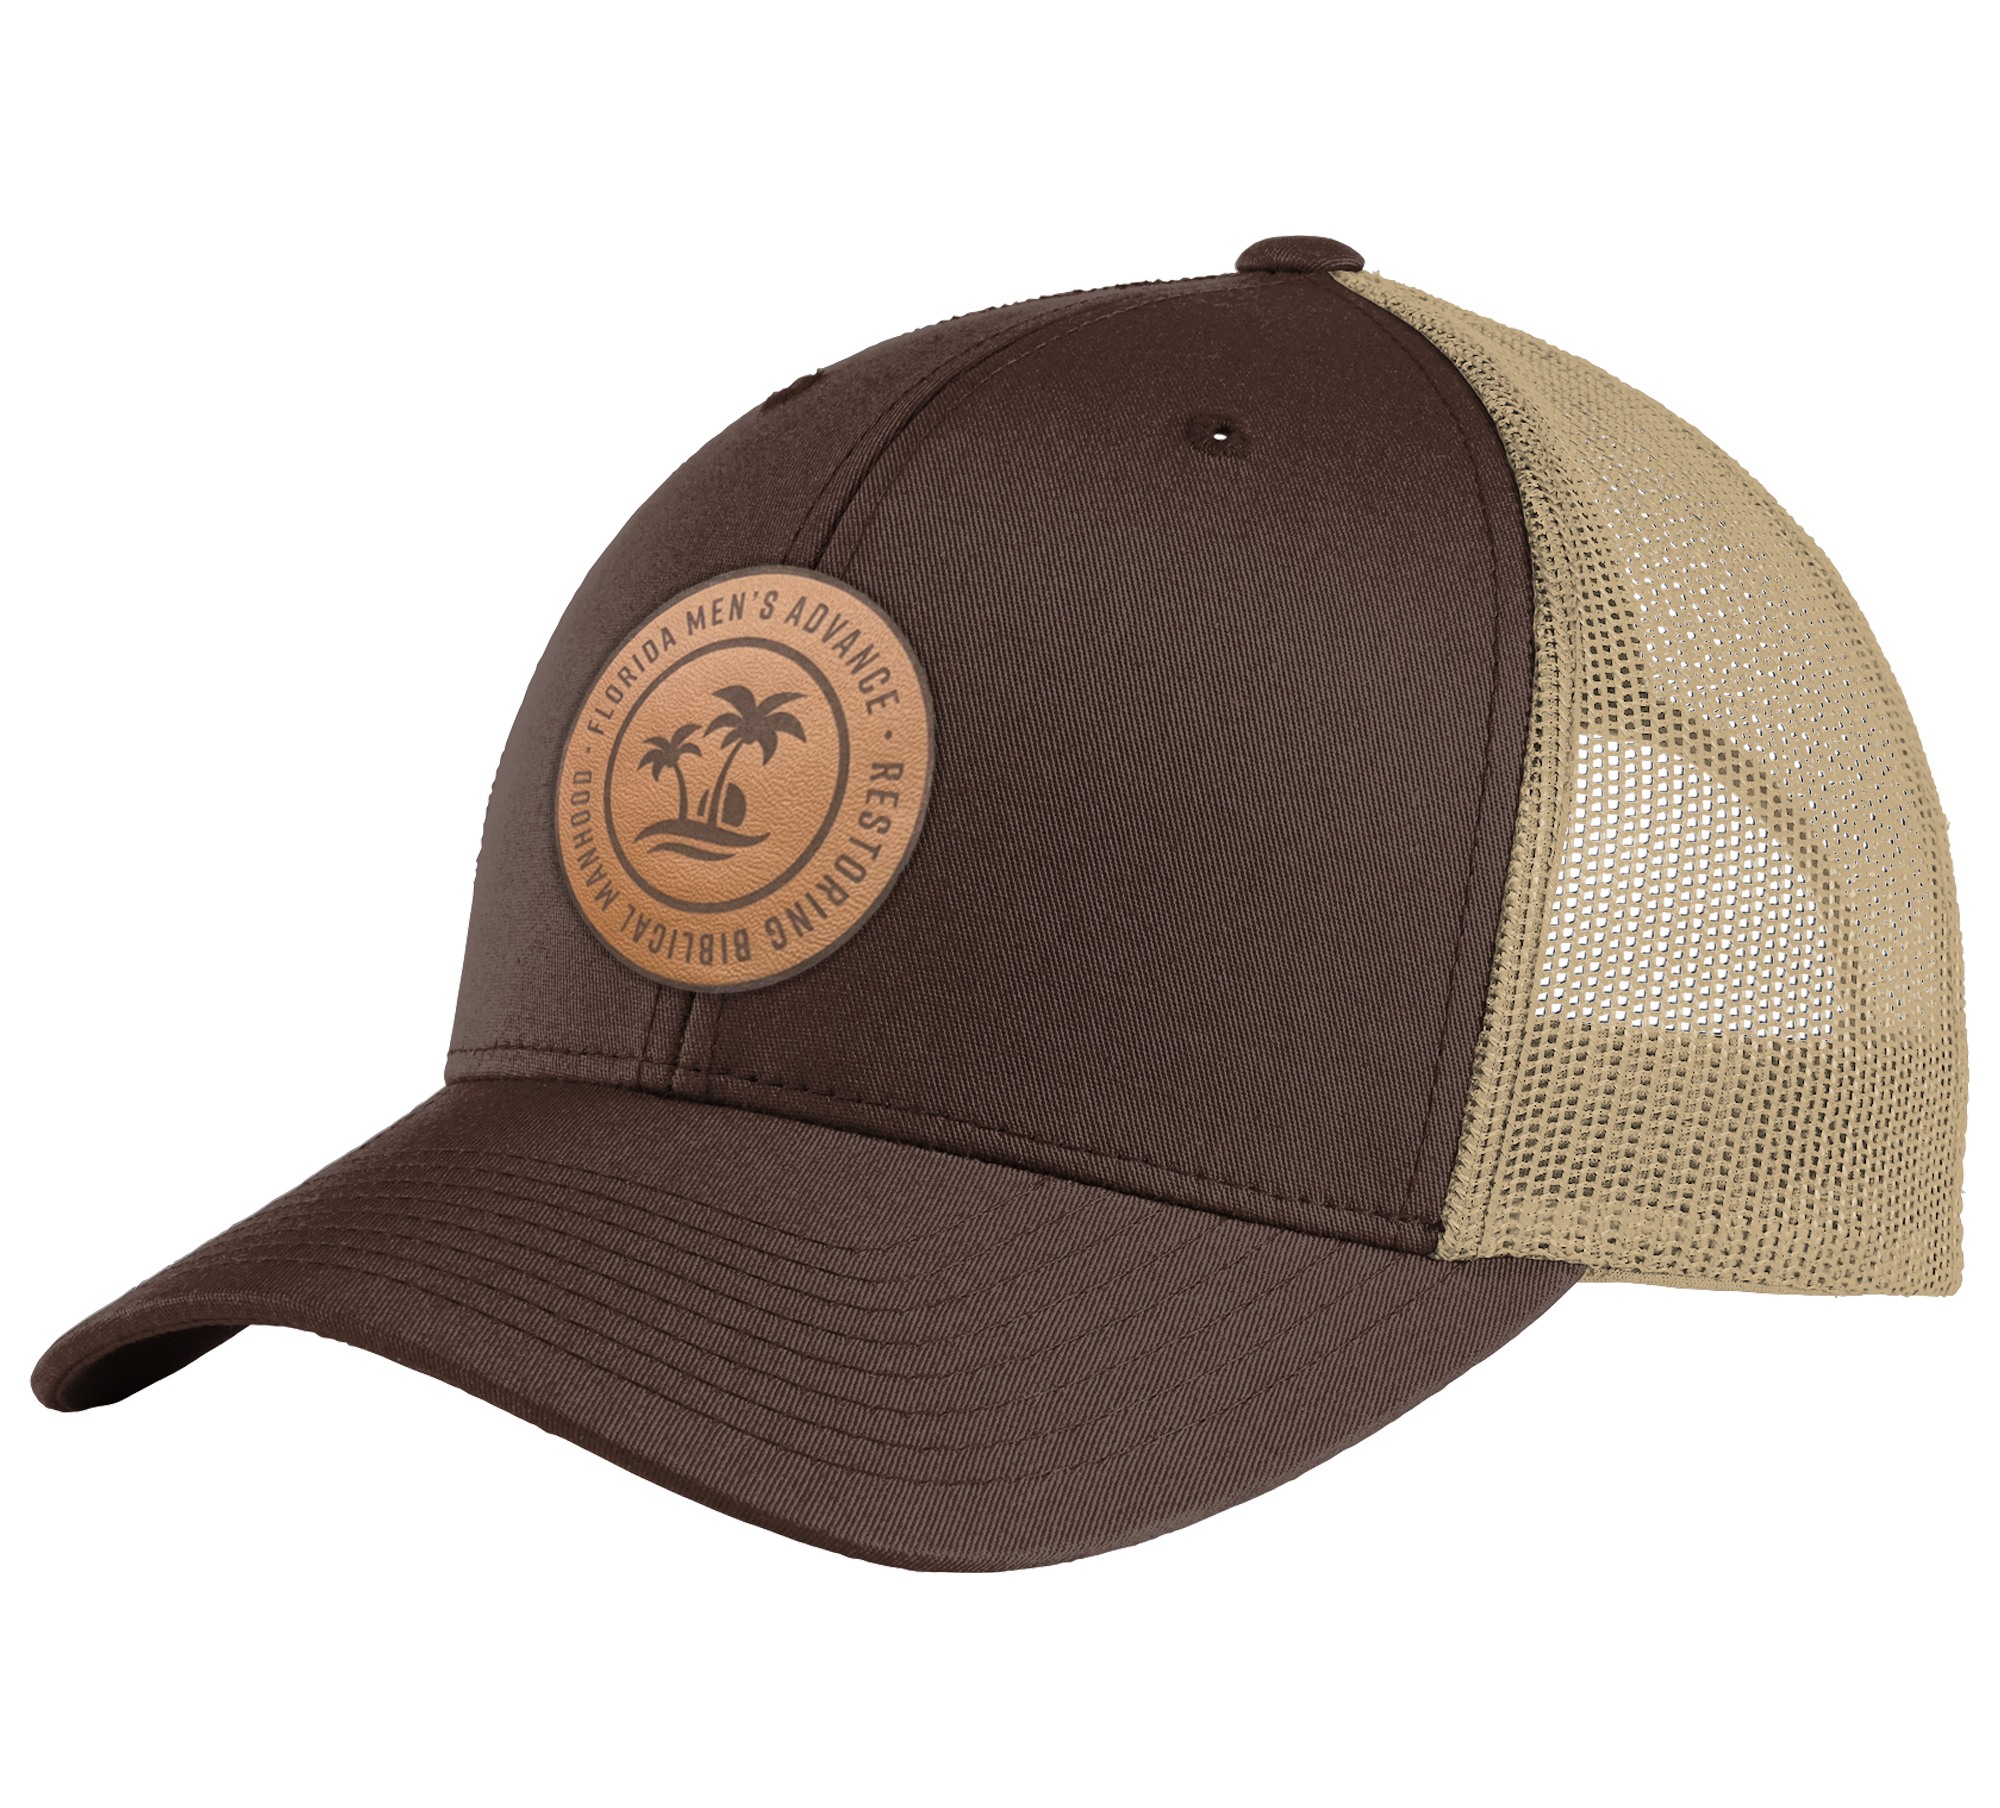 Florida Men's Advance Cafe Brown Trucker Hat